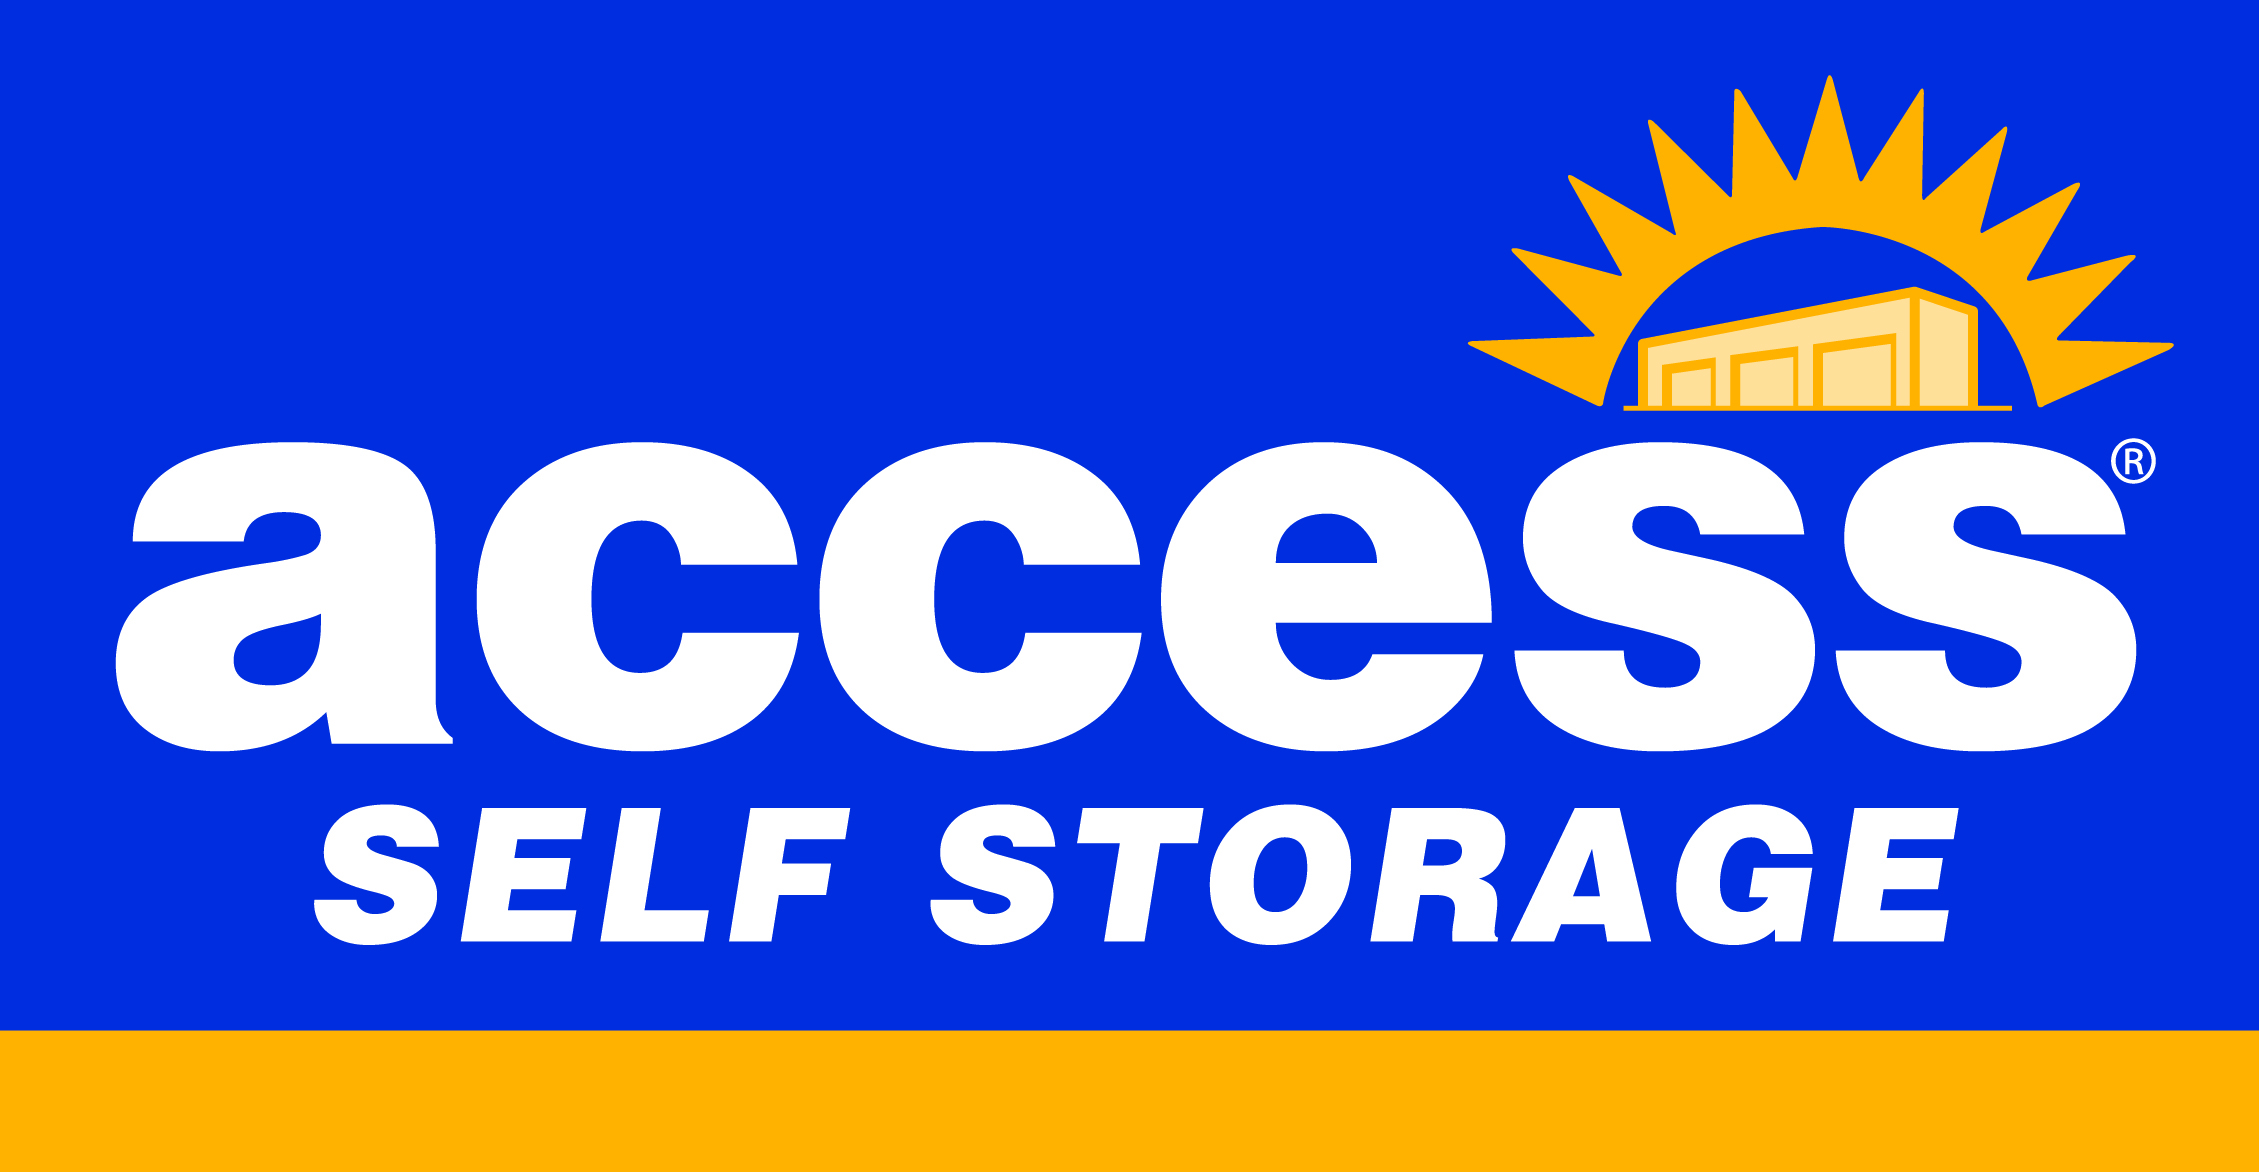 Access Self Storage of Long Island City